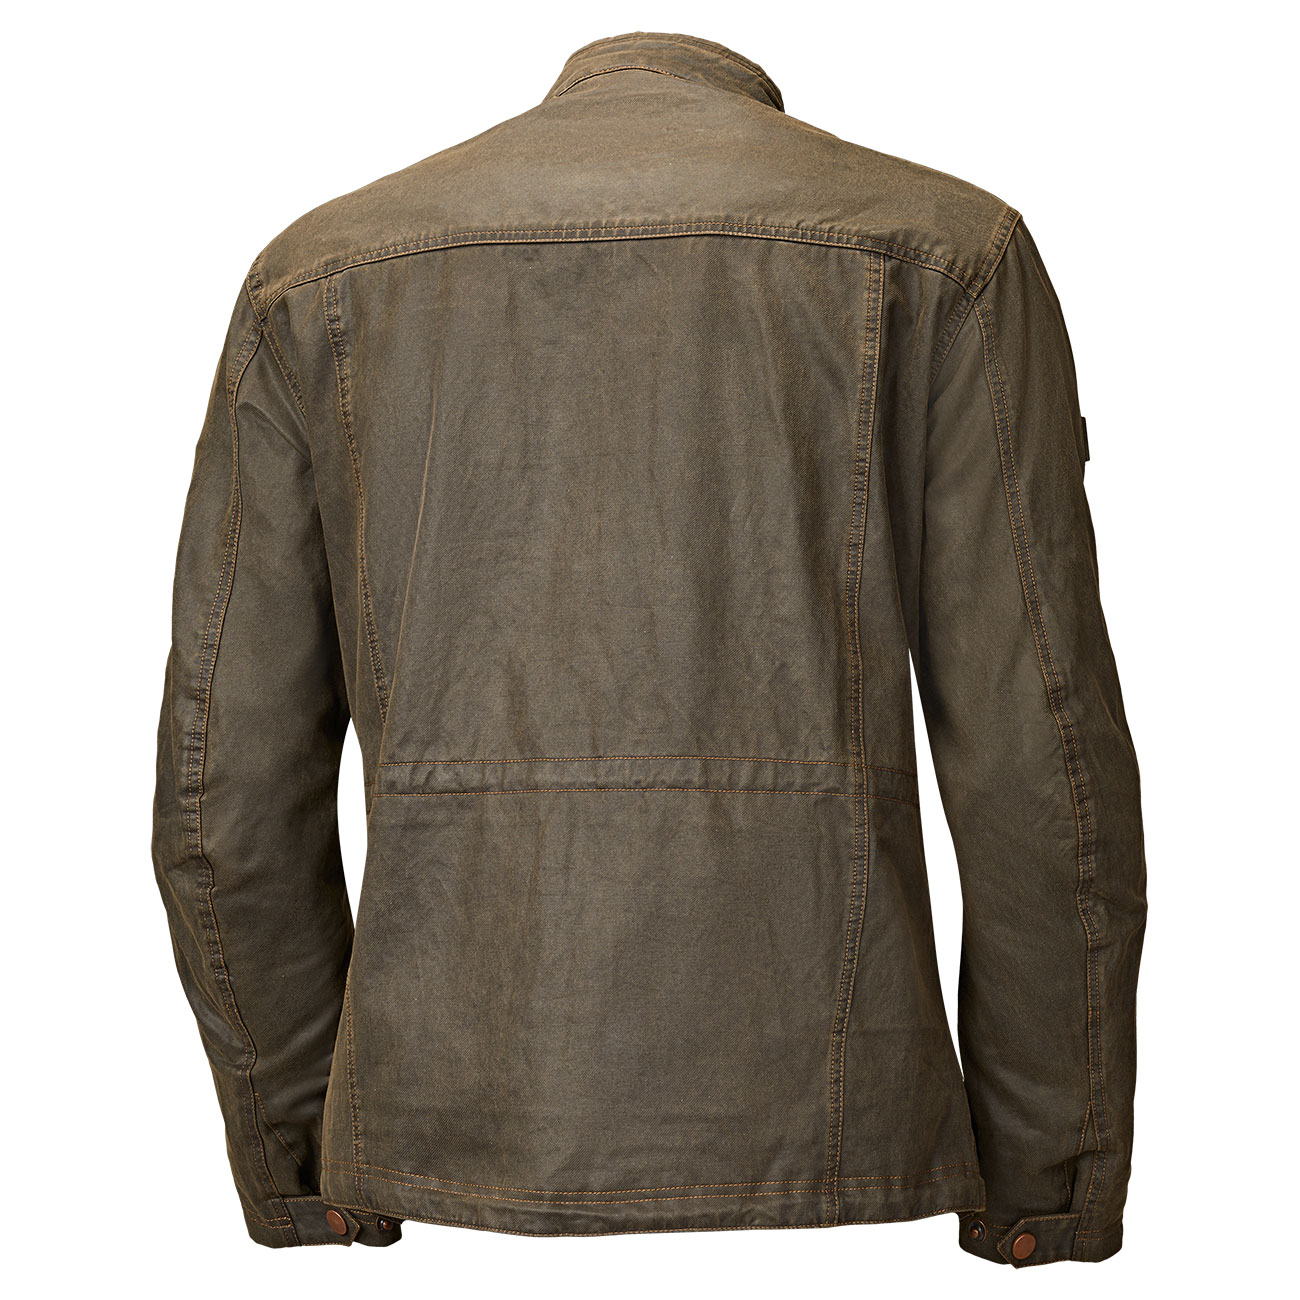 Lawrence Urban jacket